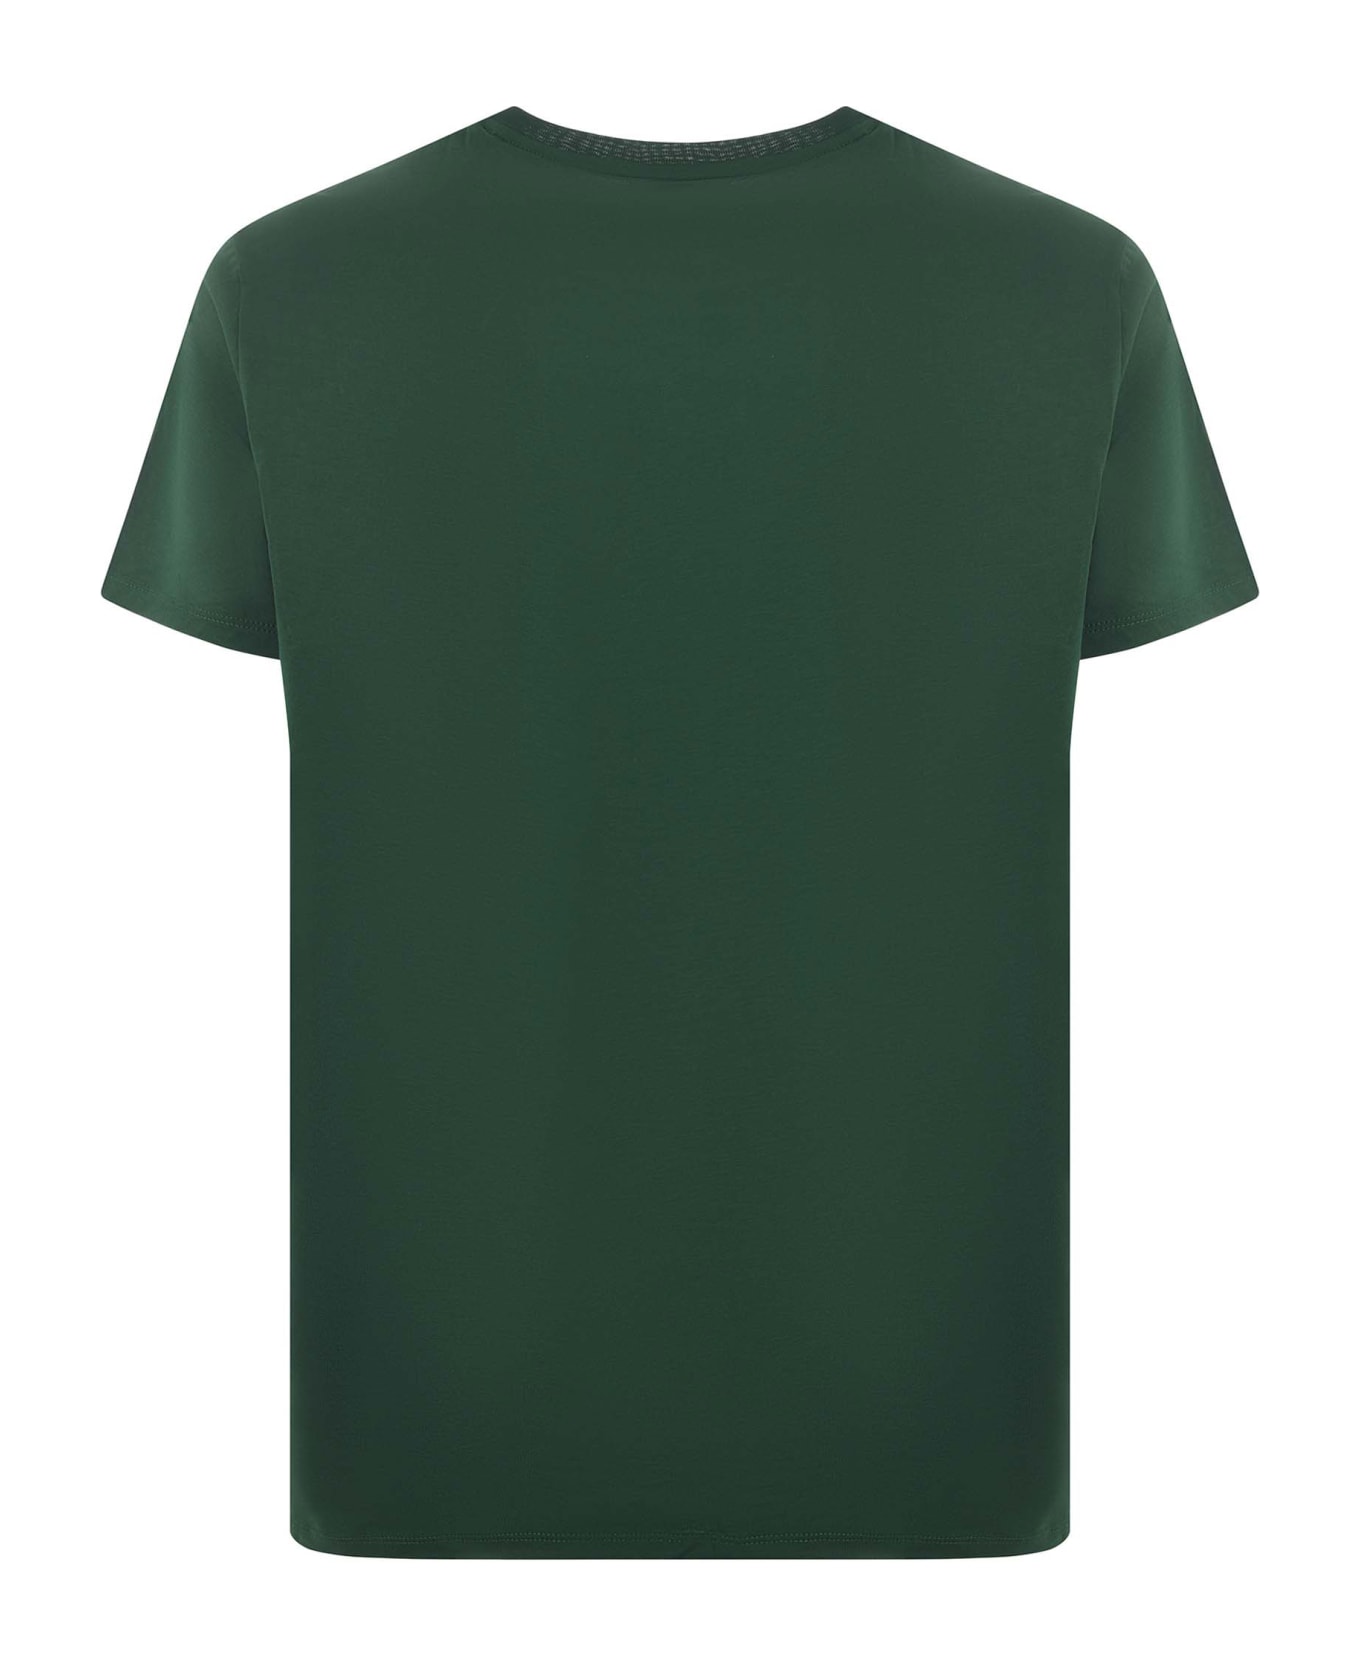 Lacoste Pima Cotton T-shirt - Verde militare